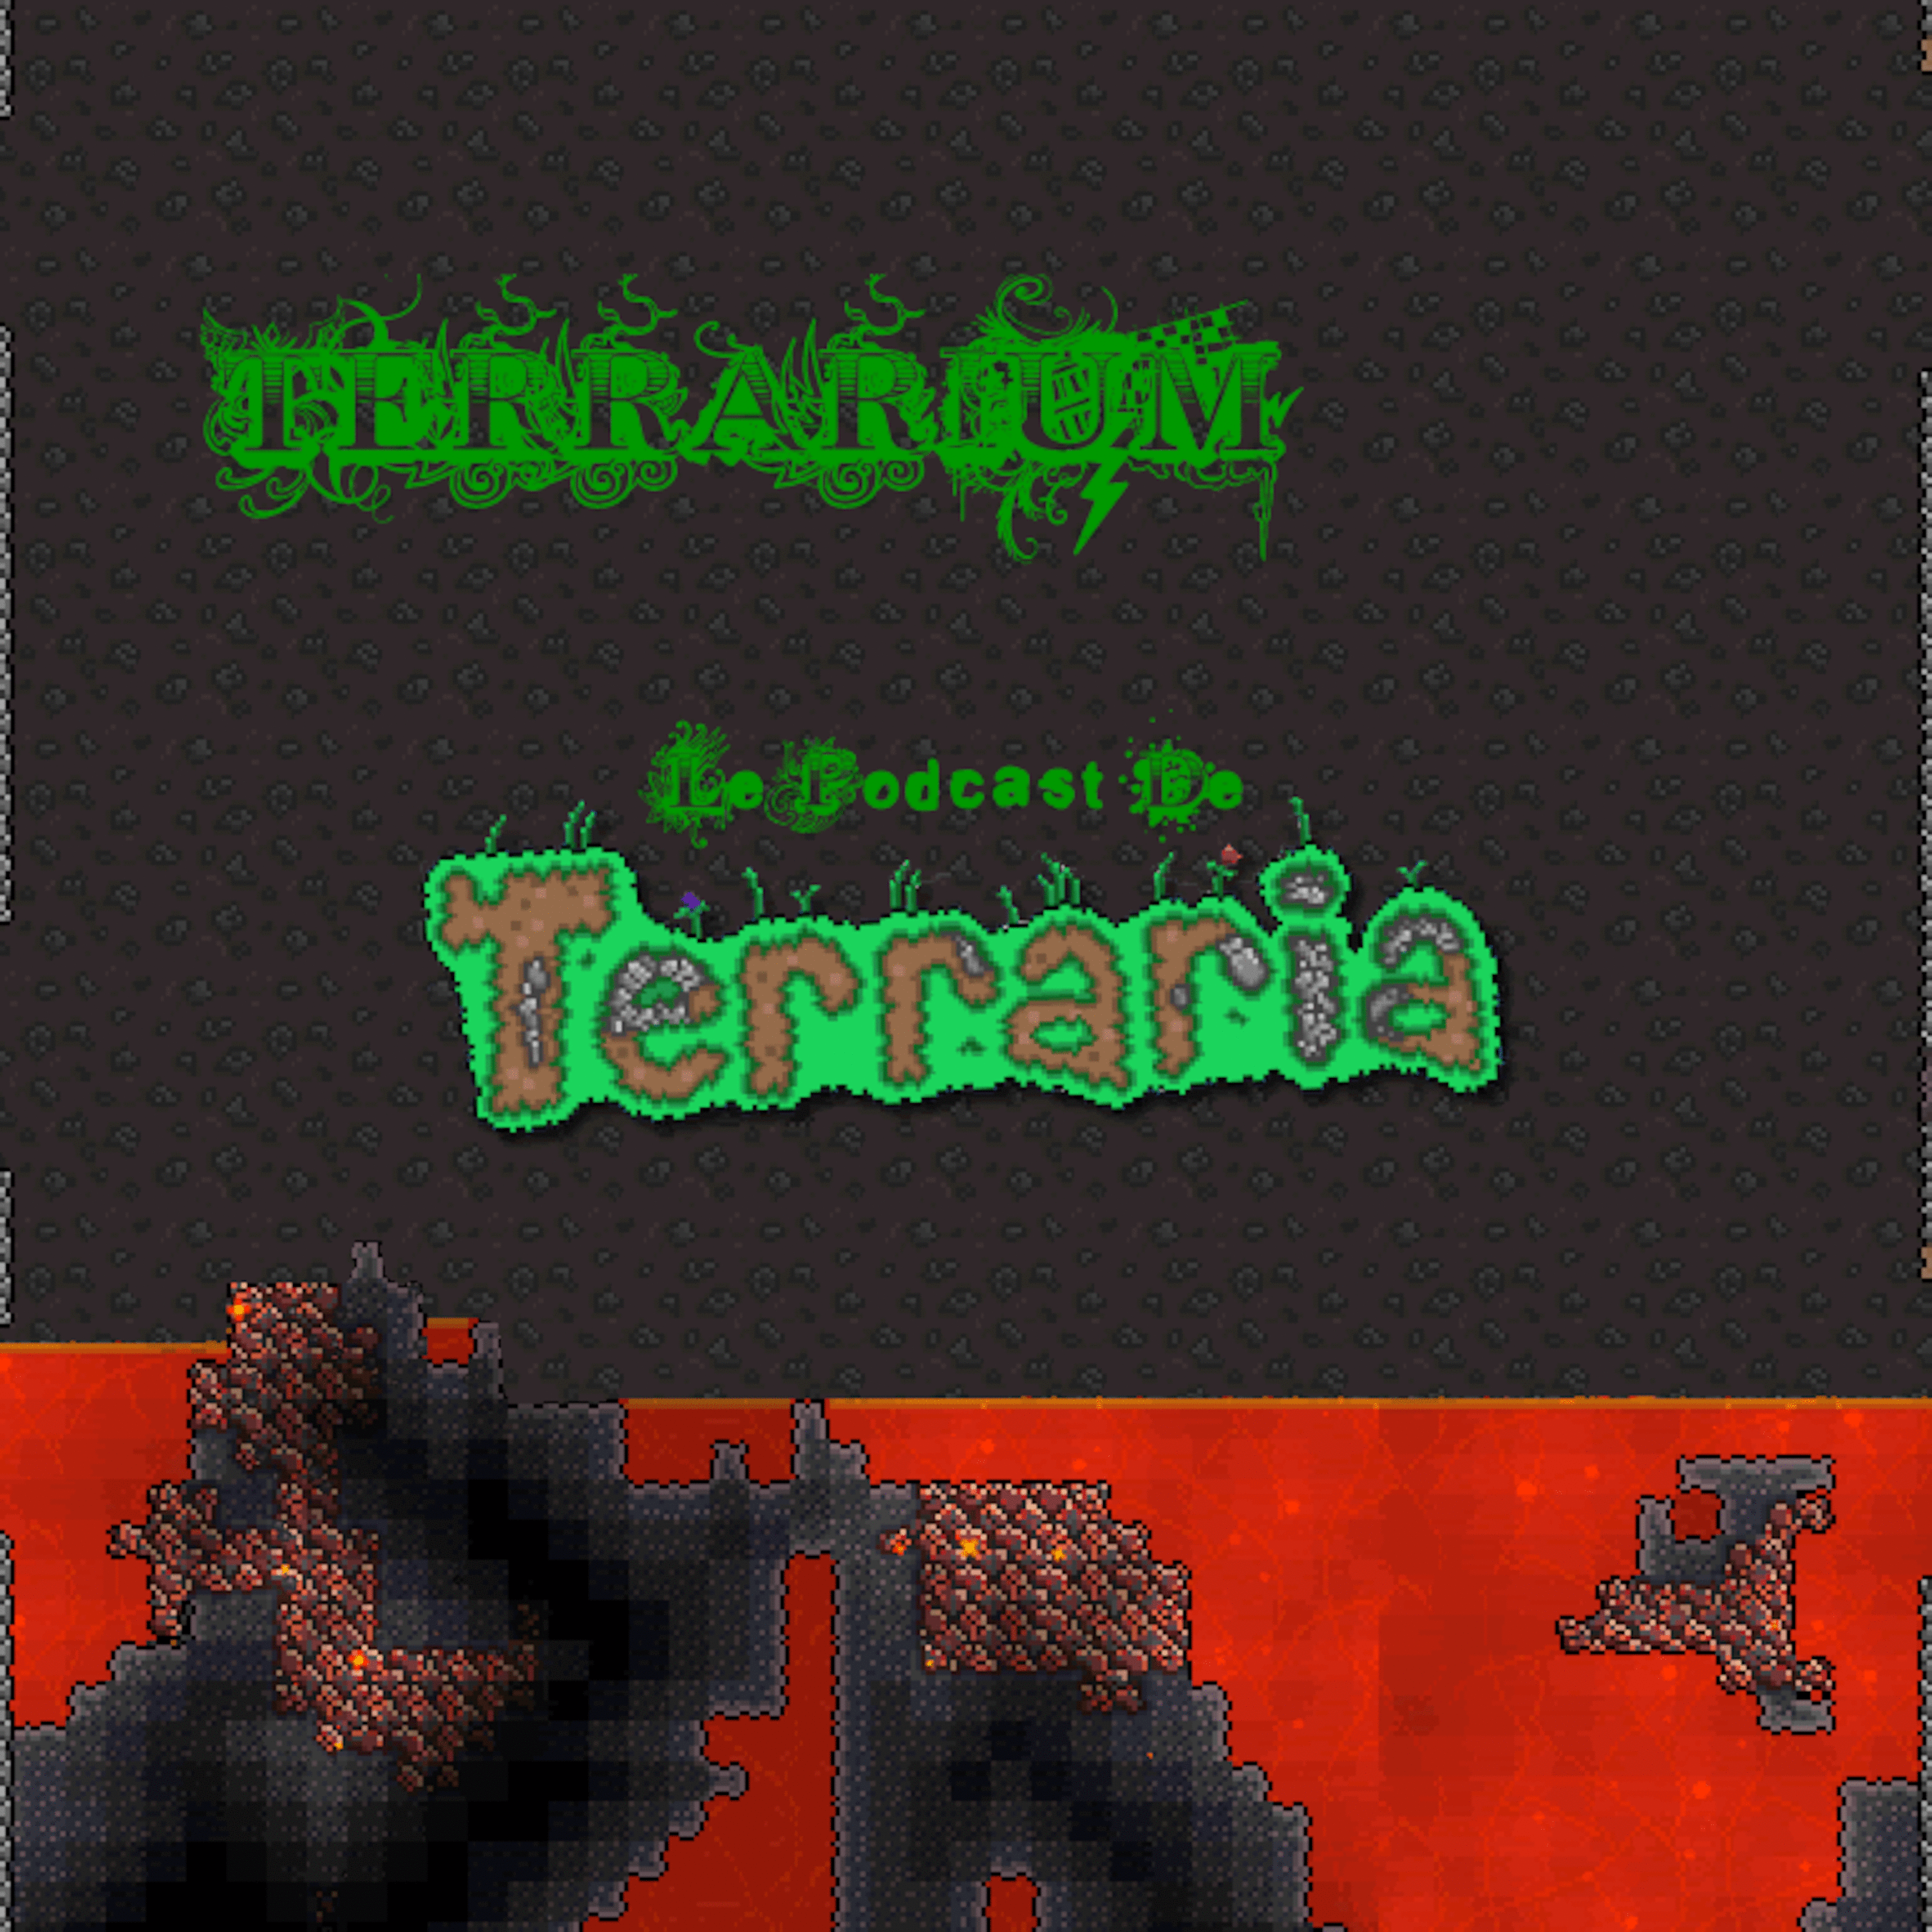 [Terrarium] LE PodCast FR de Terraria : Episode 3.